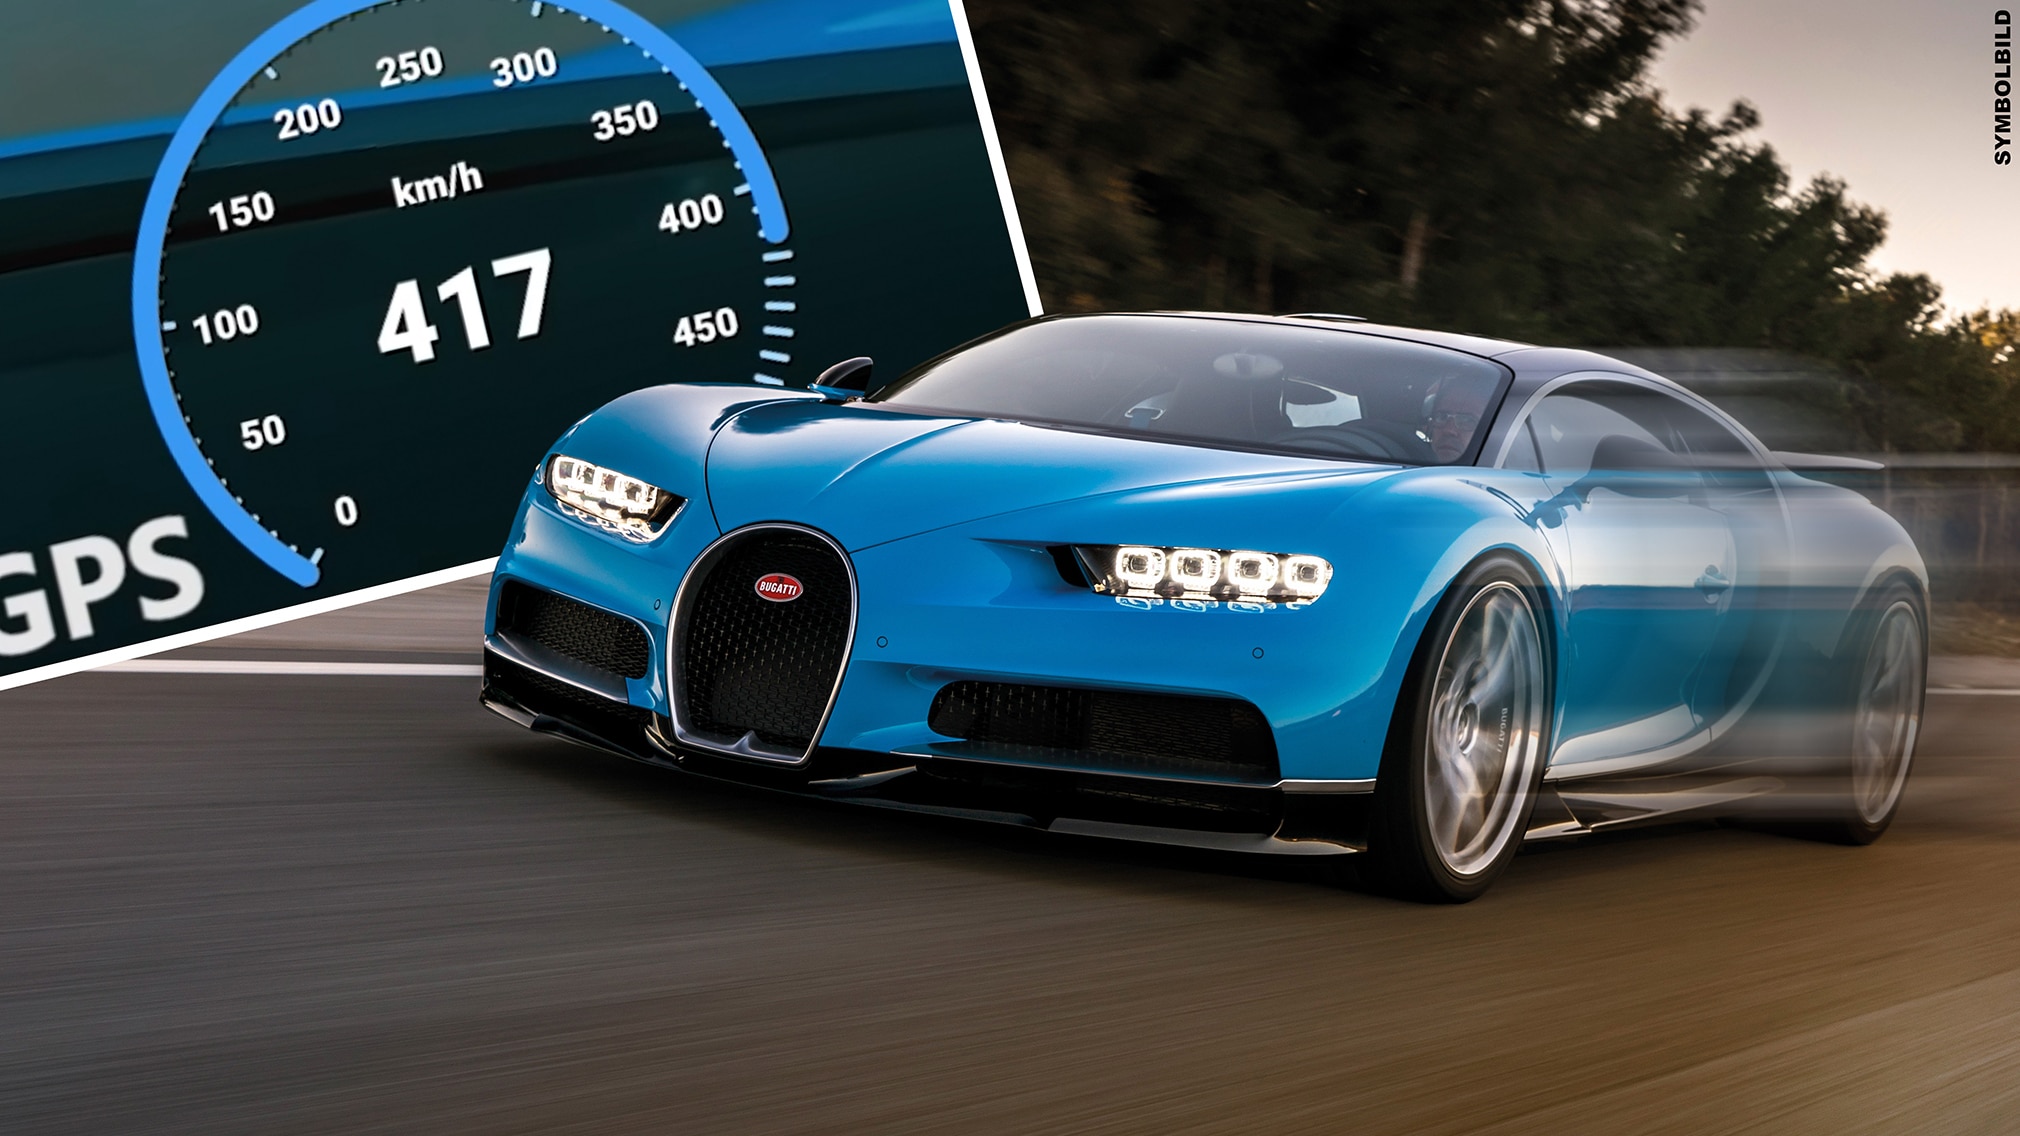 Bugatti-Chiron-2022-Topspeed-Vmax-Video-Bugatti-Chiron-brettert-mit-417-km-h-ber-die-Autobahn